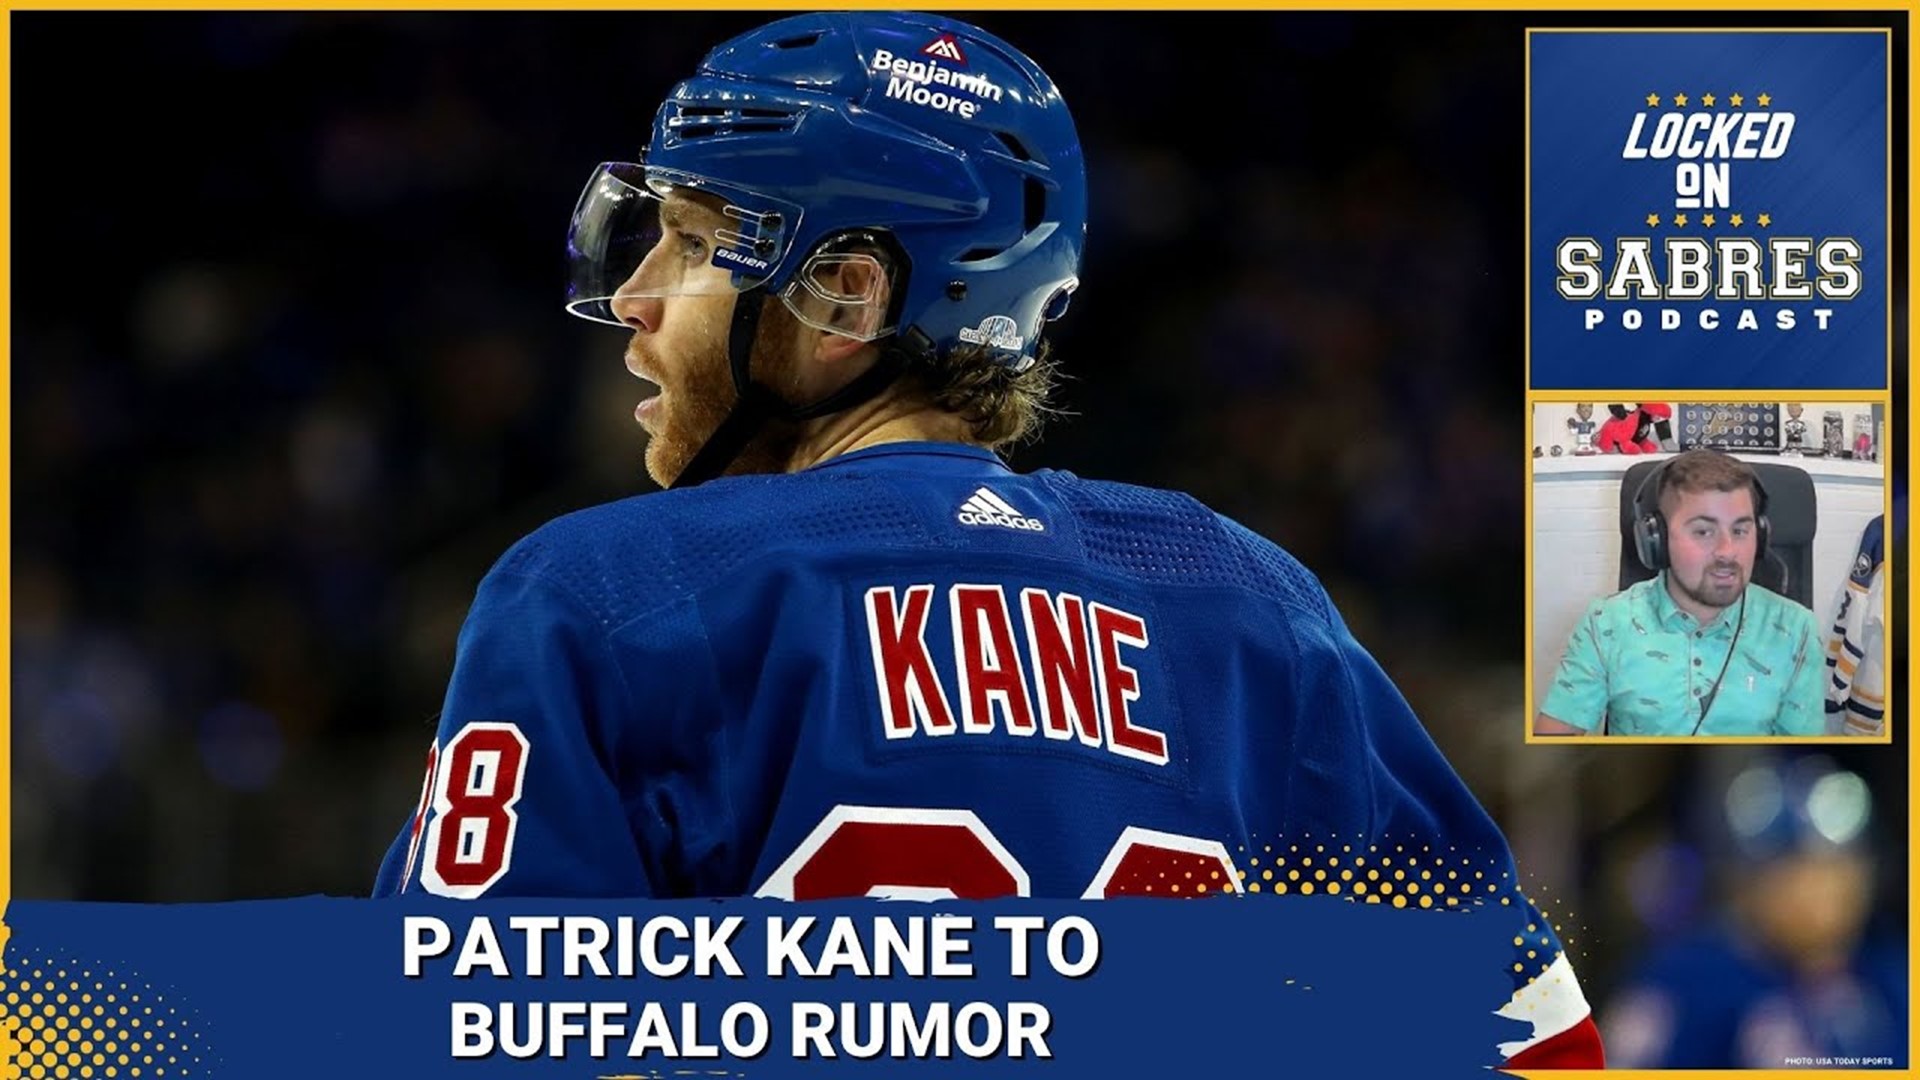 Patrick Kane to the Buffalo Sabres rumors emerge